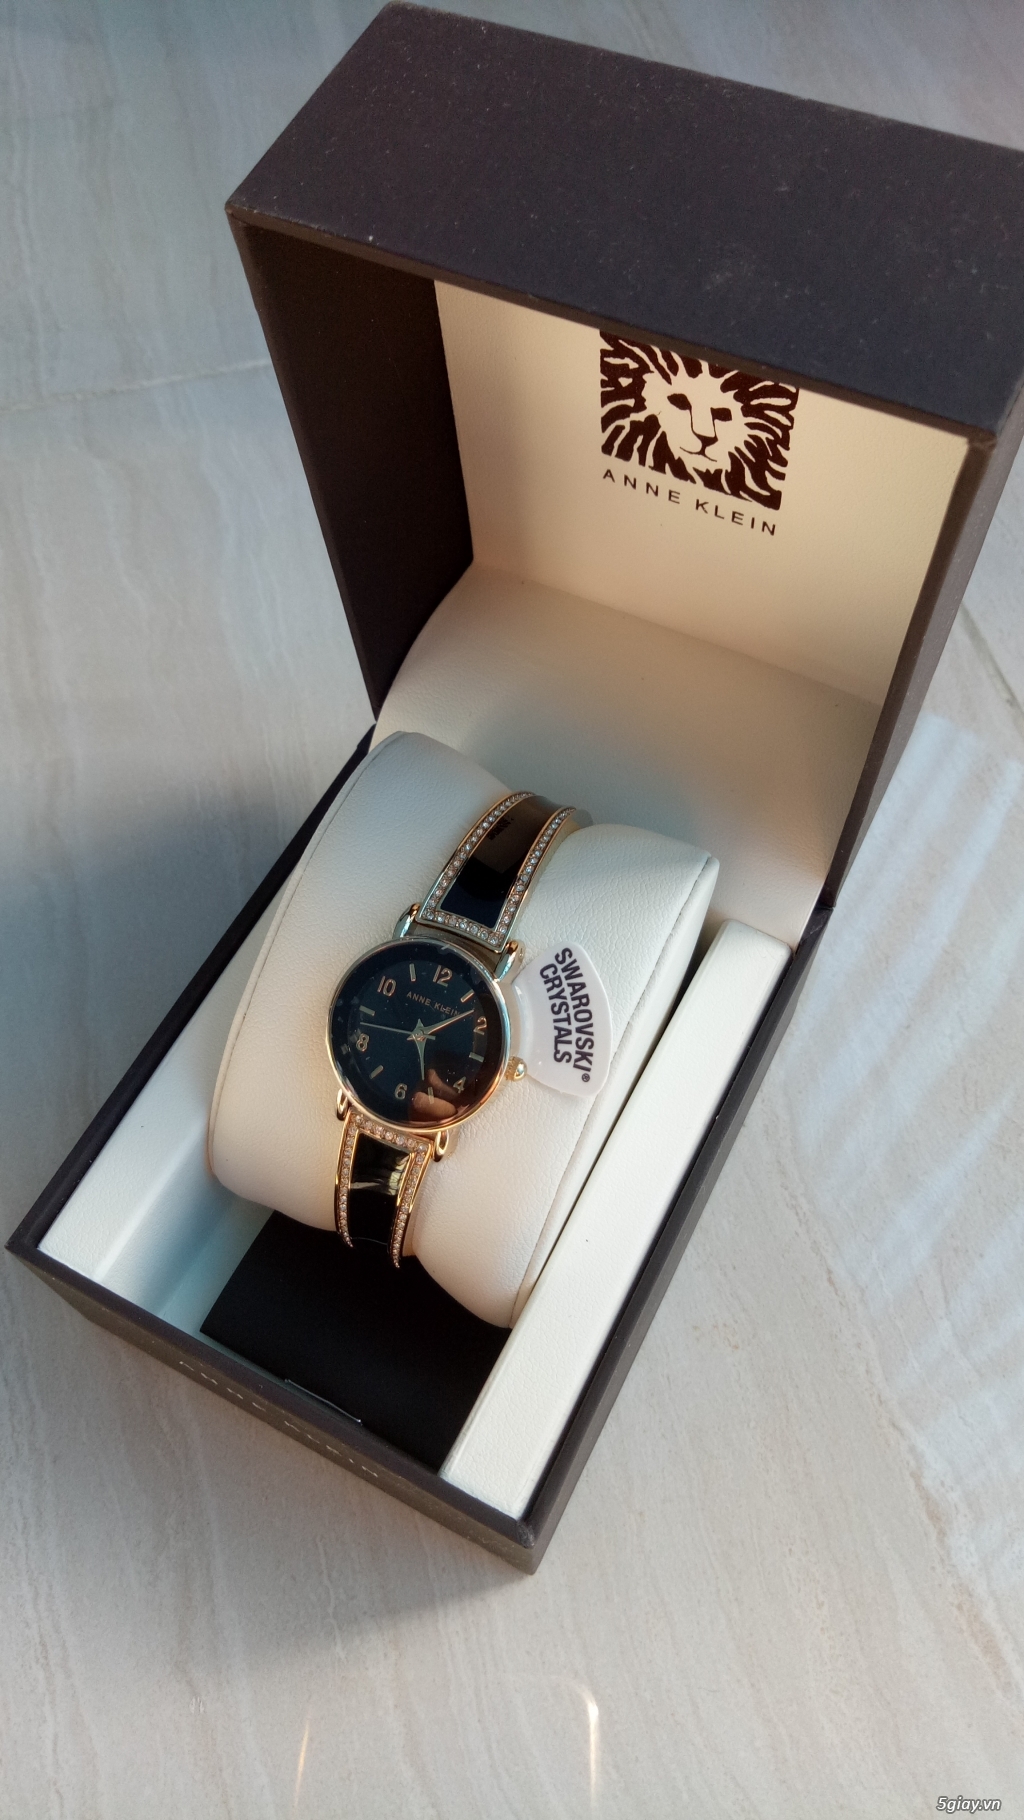 Cần bán: Đồng hồ Anne Klein nữ hàng order web cam kết thật, mới 100% - 2